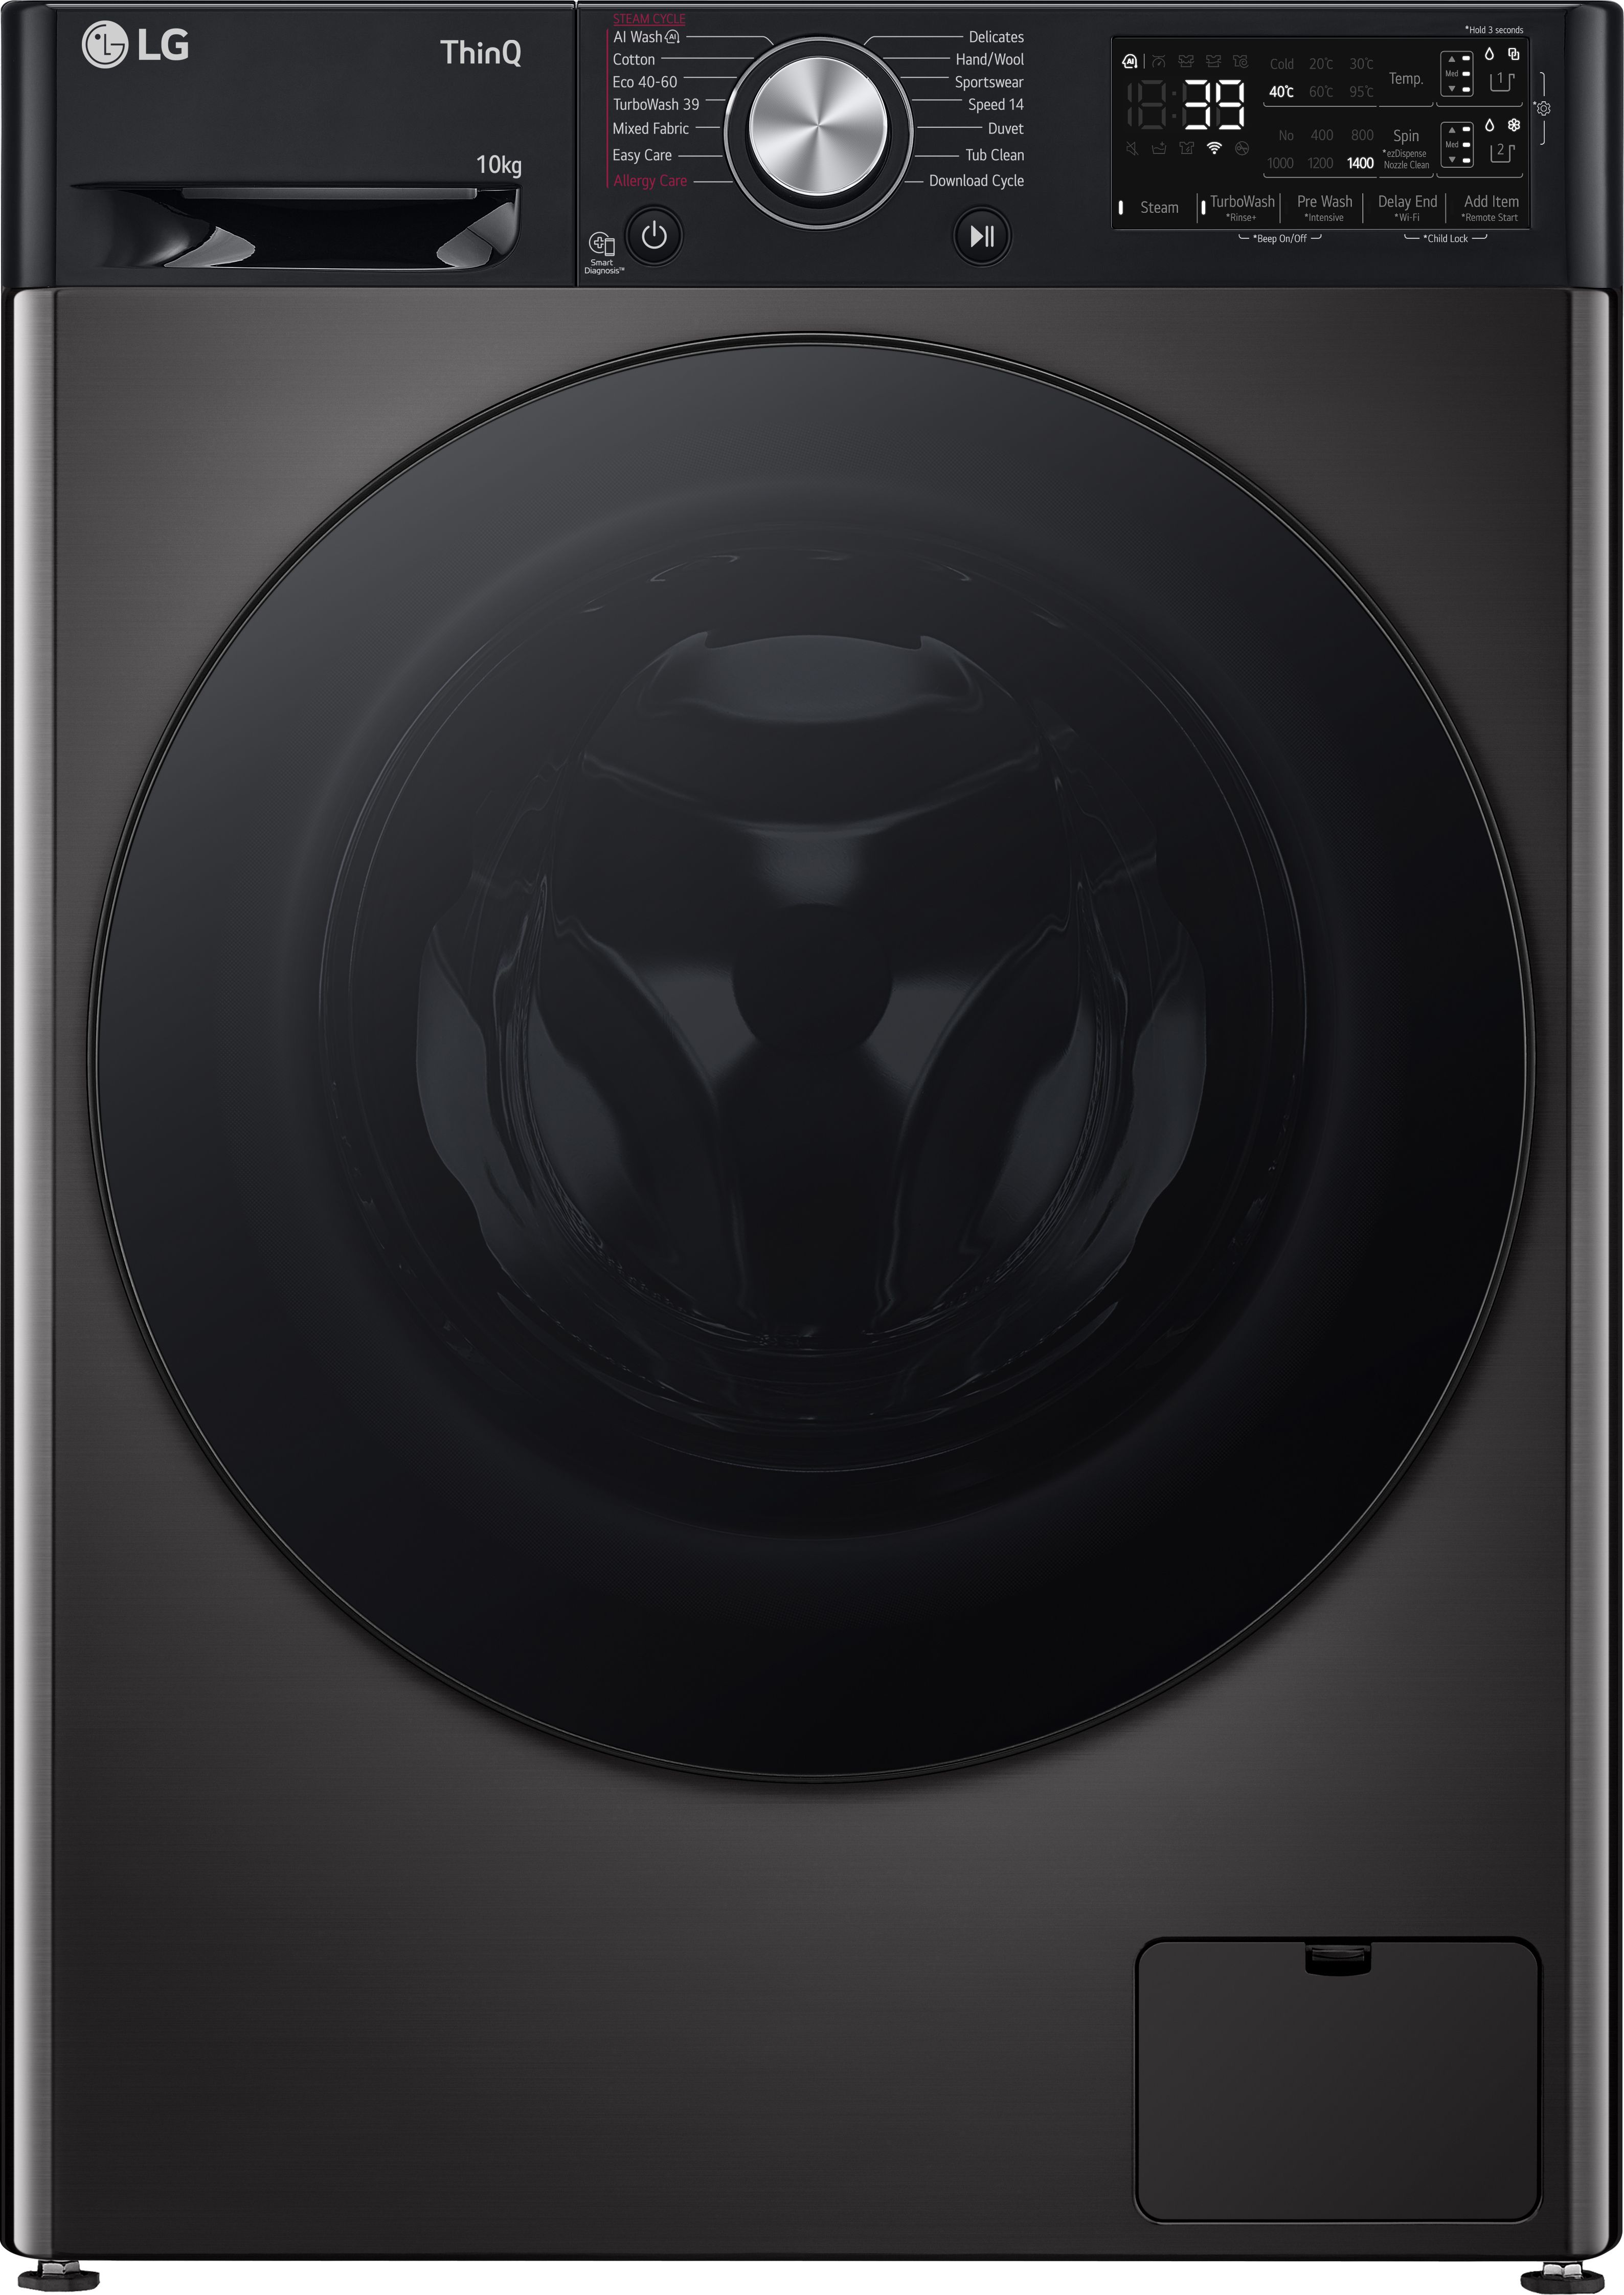 LG EZDispense F4Y710BBTA1 10kg WiFi Connected Washing Machine with 1400 rpm - Black Metallic - A Rated, Black